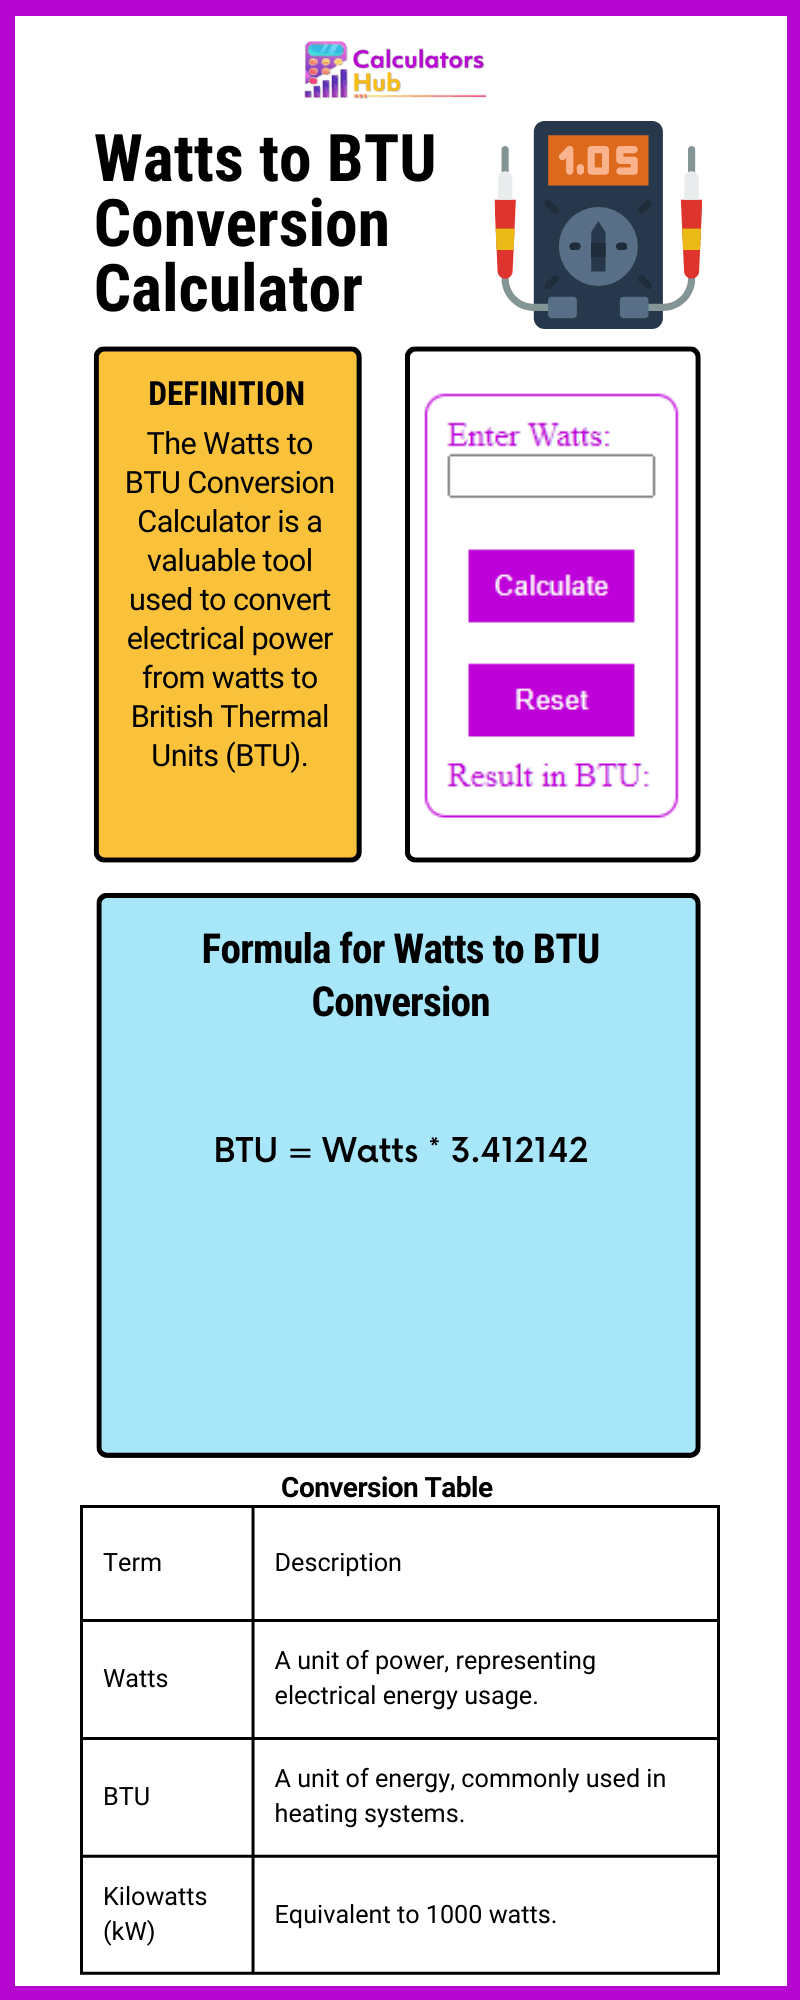 Watts to BTU Conversion Calculator